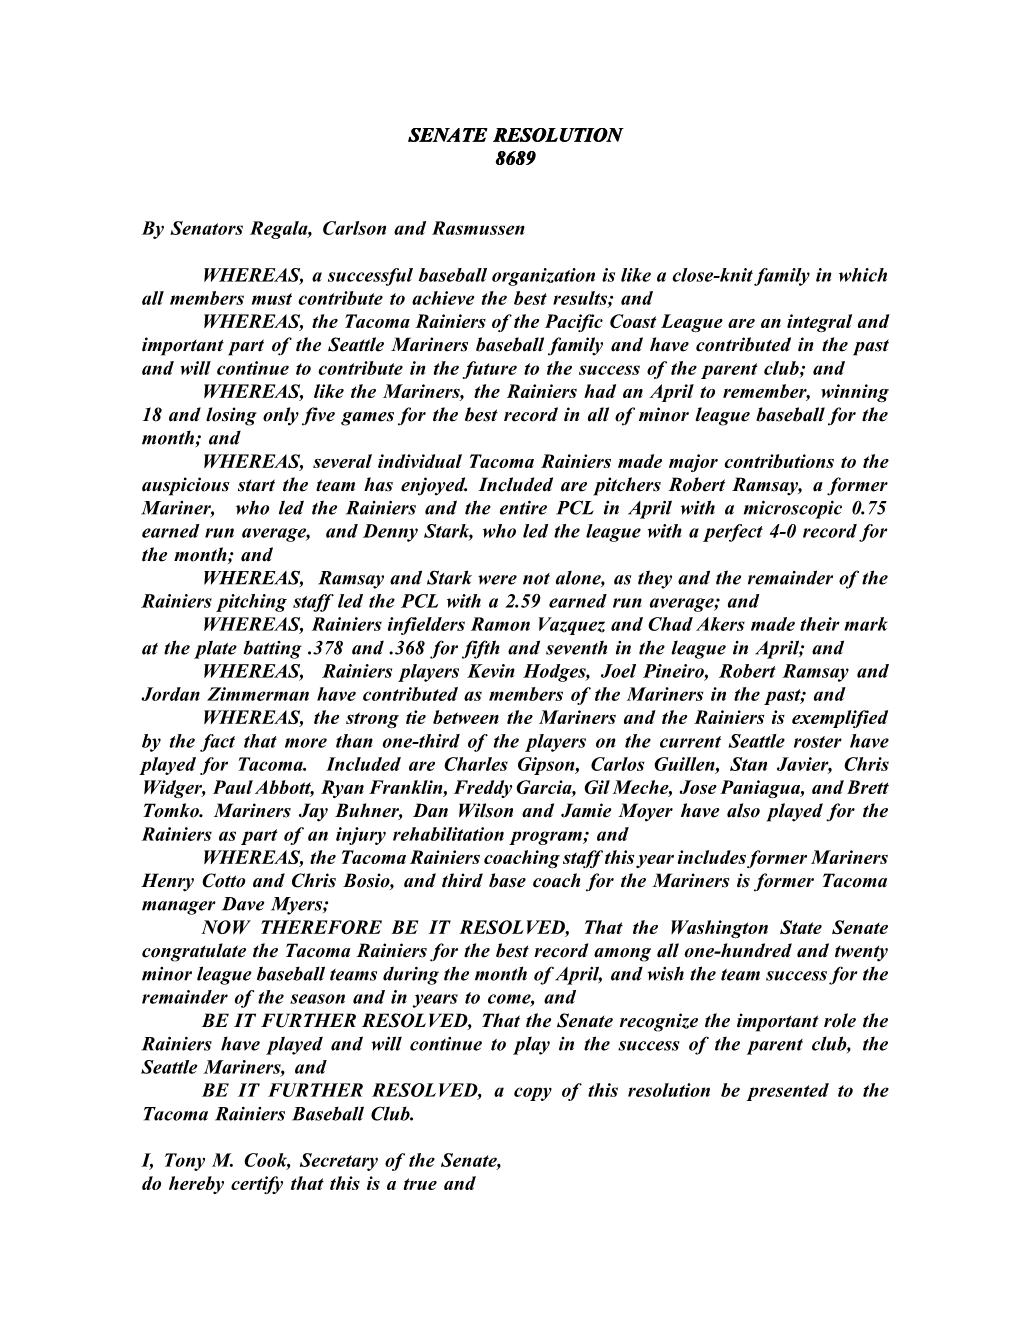 SENATE RESOLUTION 8689 by Senators Regala, Carlson And